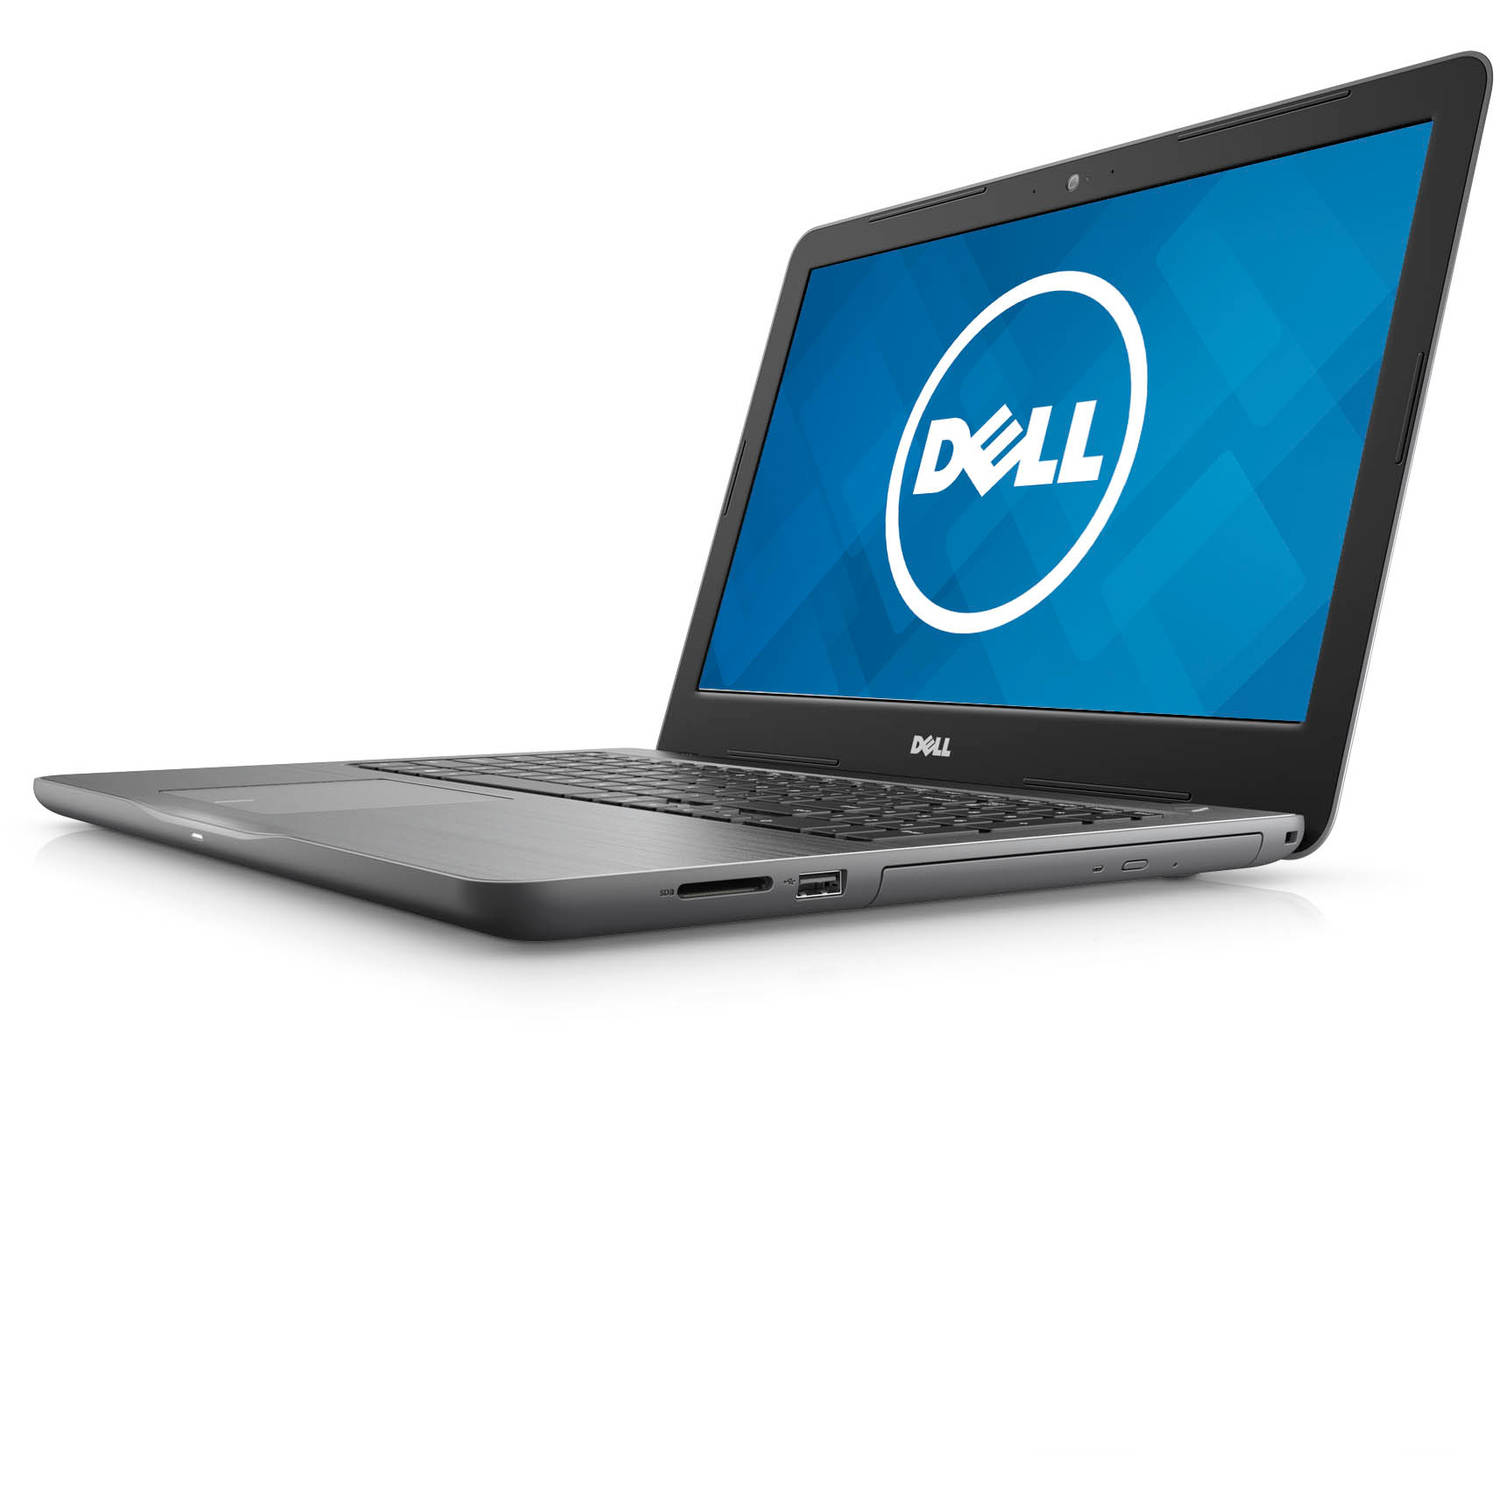 Dell - Inspiron 15.6" Touch-Screen Laptop - AMD FX - 16GB Memory - AMD Radeon R7 M445 - 1TB HD - Matte gray - image 4 of 8